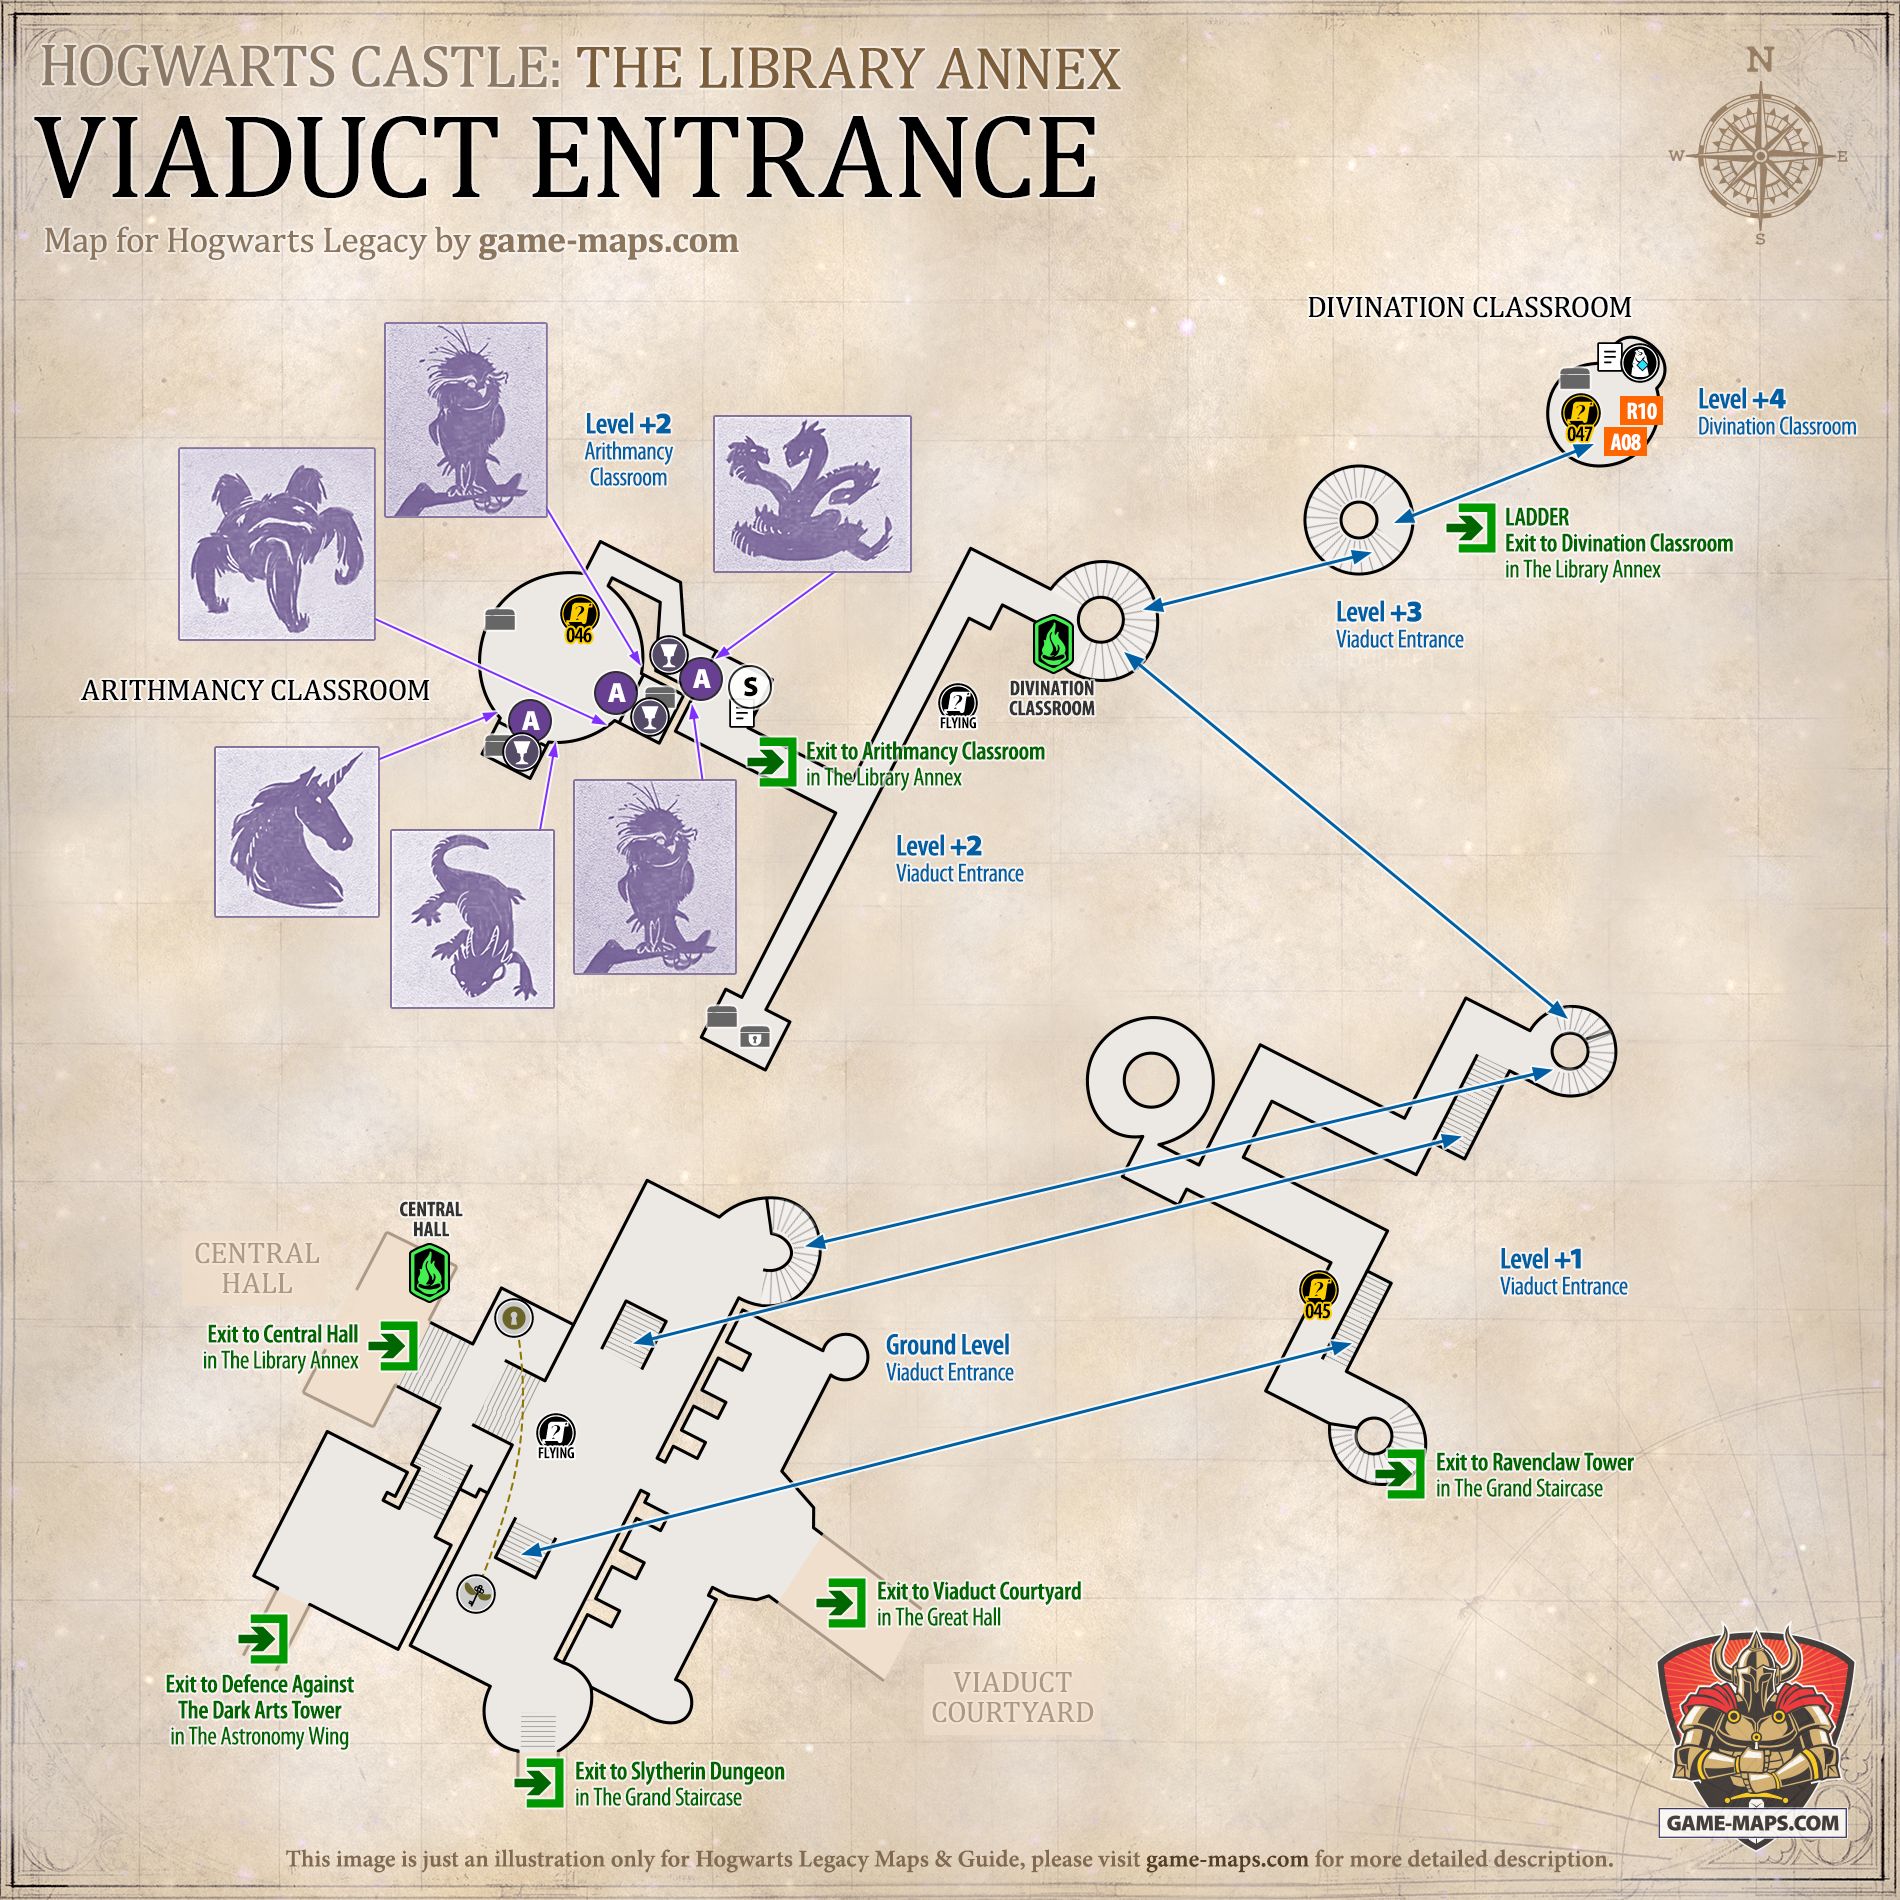 Viaduct Entrance Hogwarts Legacy